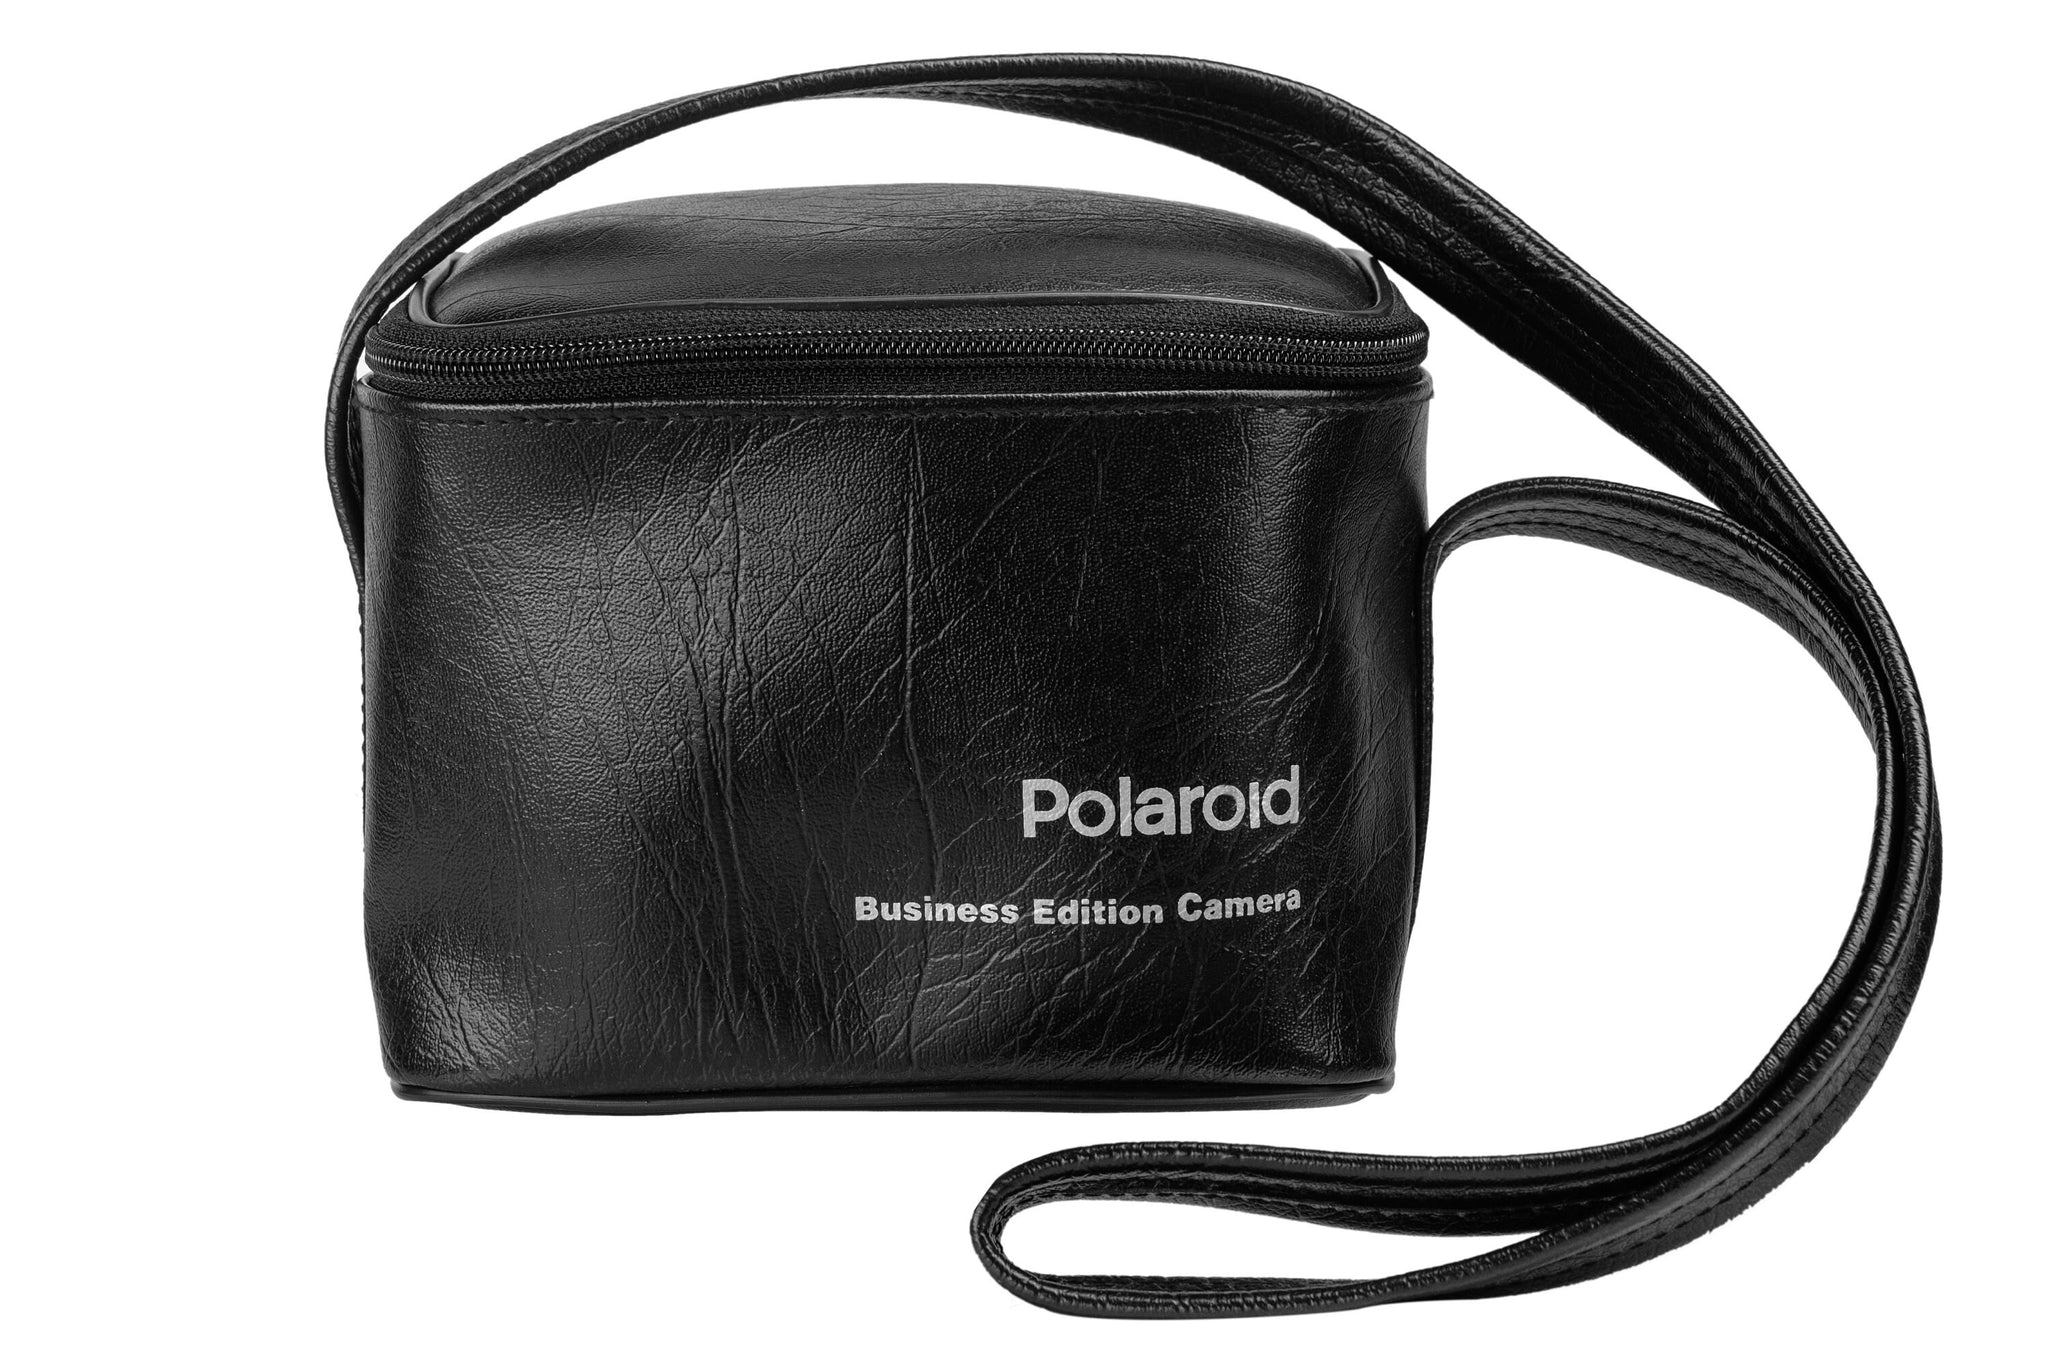 Black Polaroid Camera Bag, Original POLAROID - Business Edition Bag NR 95 - Vintage Polaroid Instant Cameras